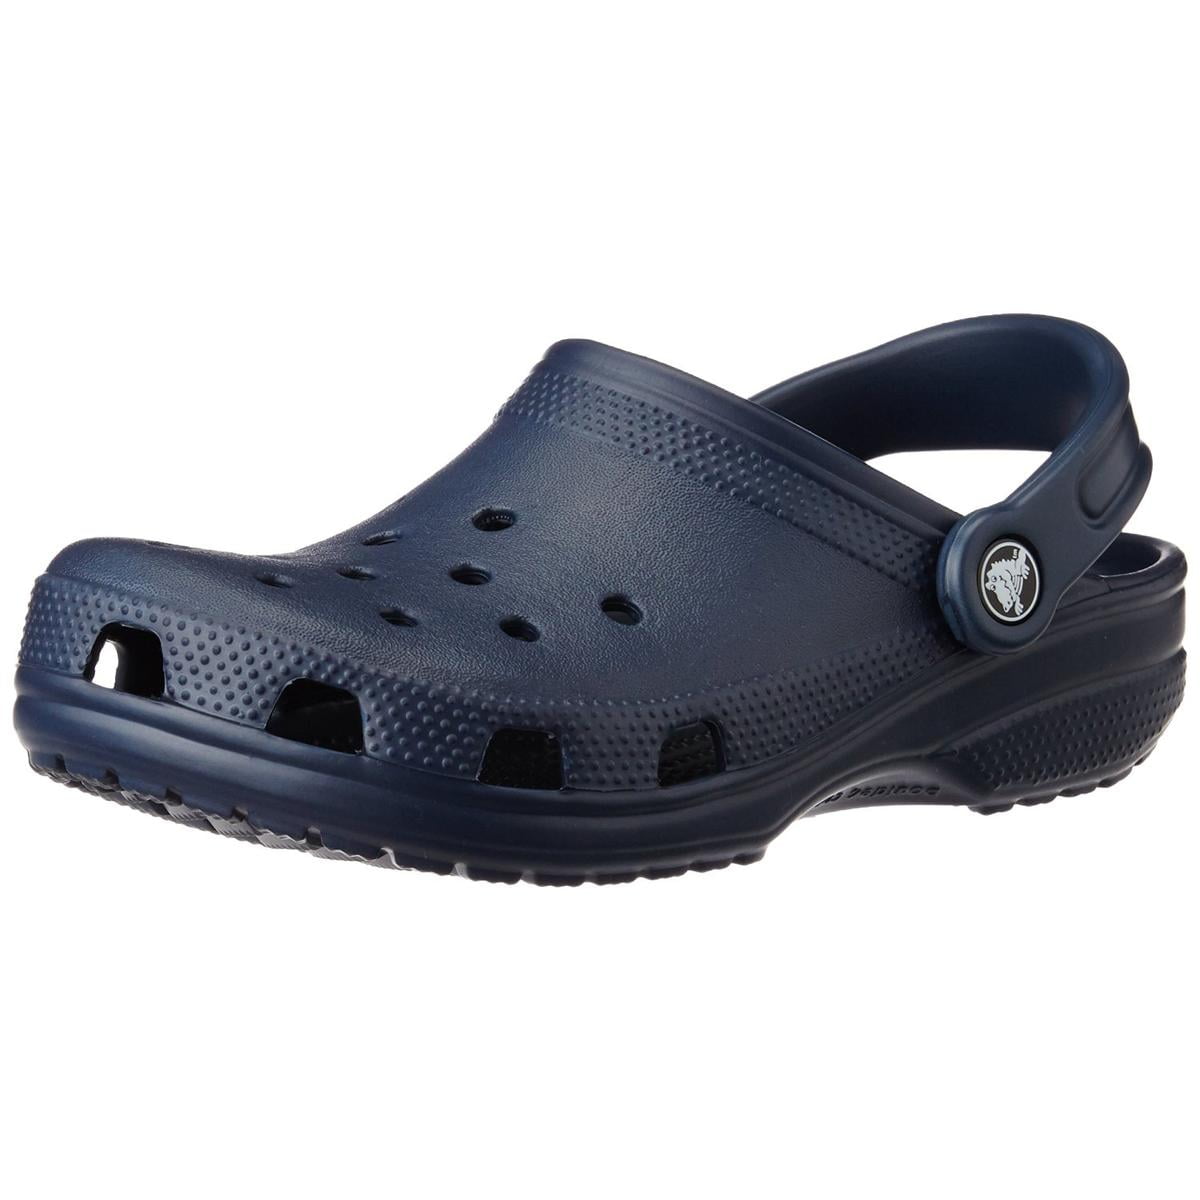 croc like shoes walmart